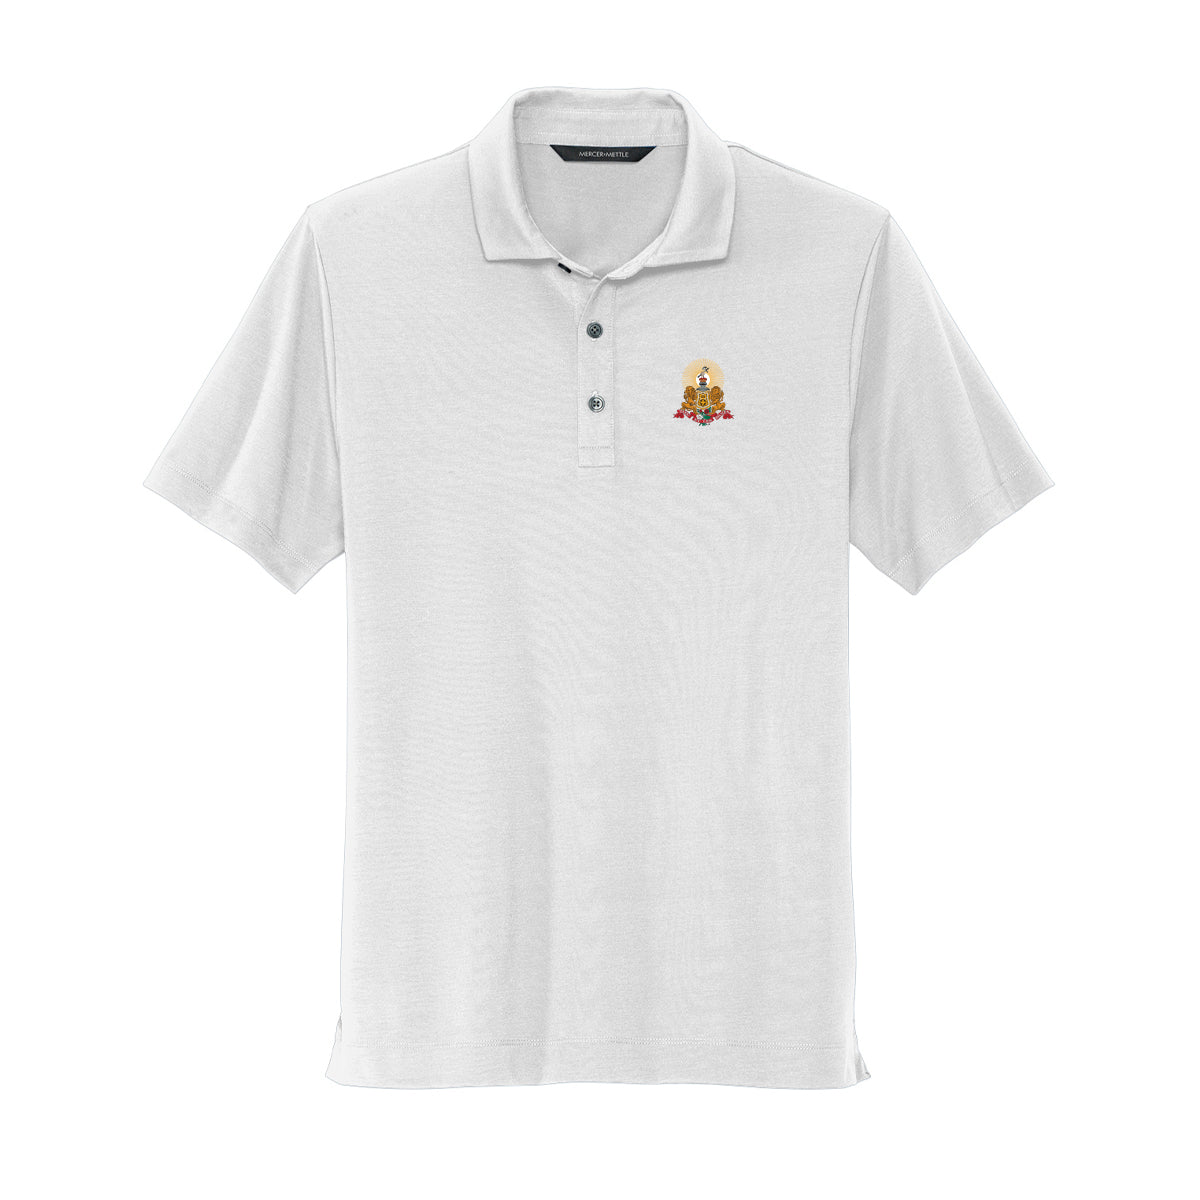 New! Kappa Alpha White Crest Polo